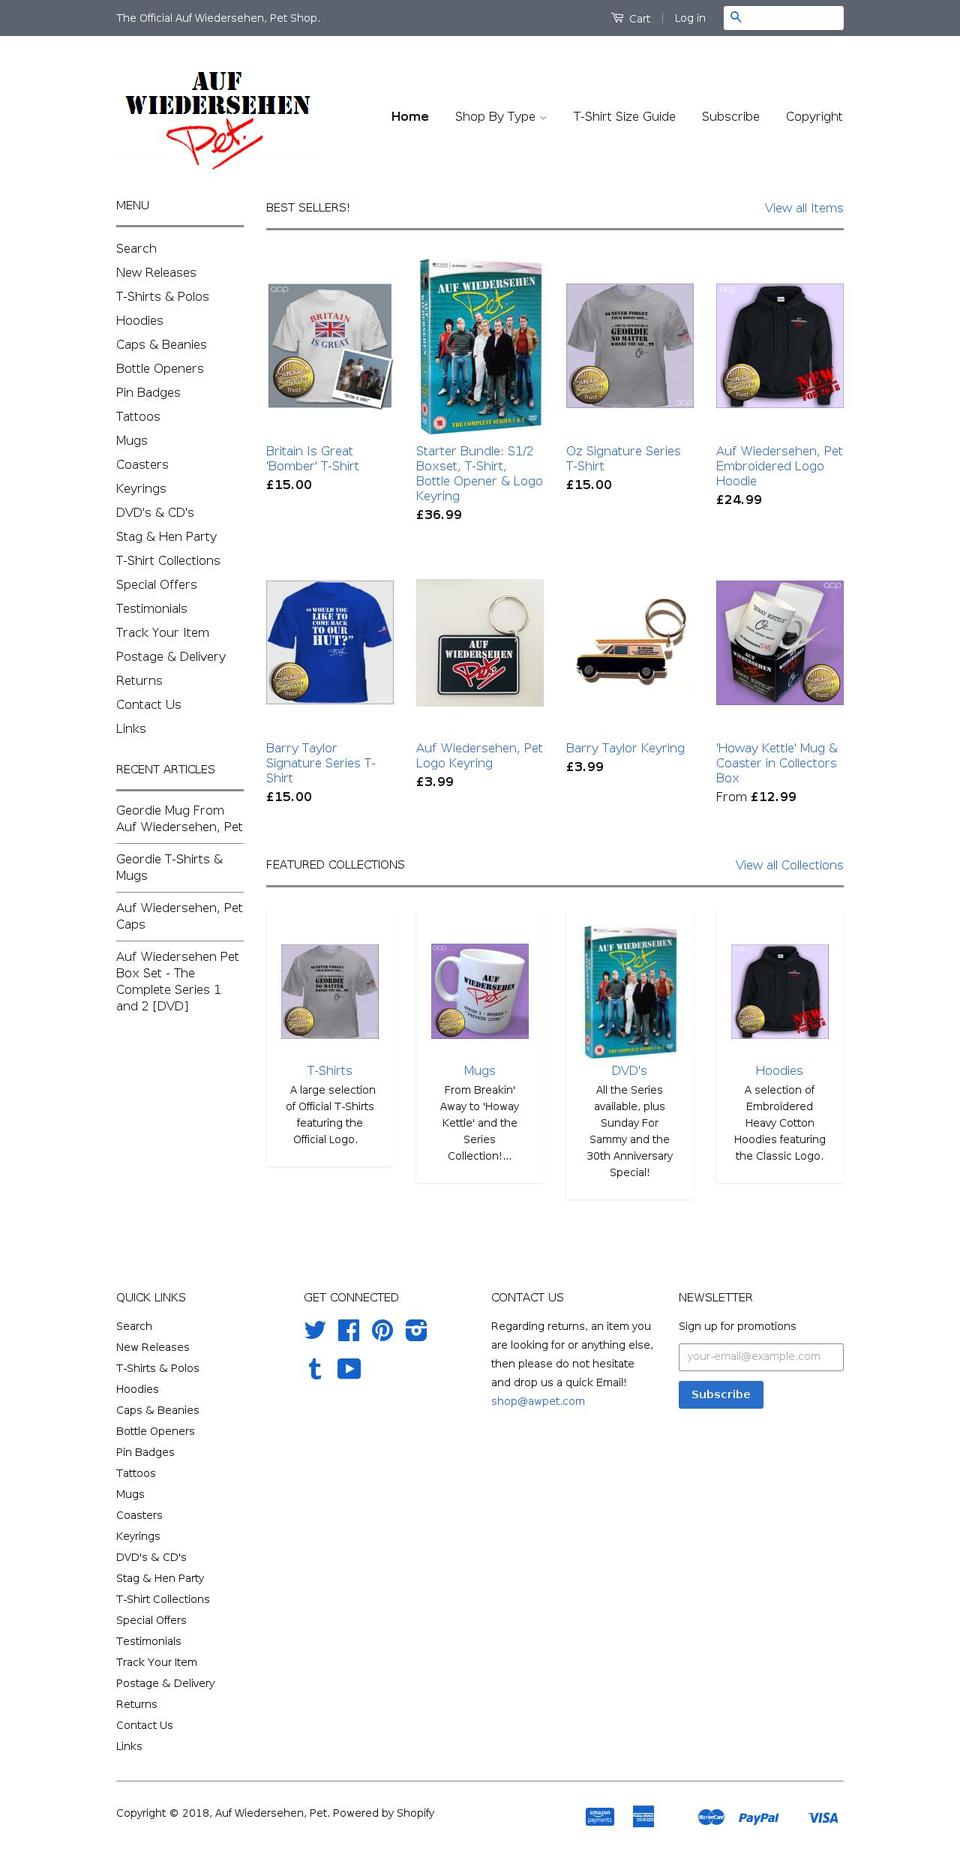 auf.pet shopify website screenshot